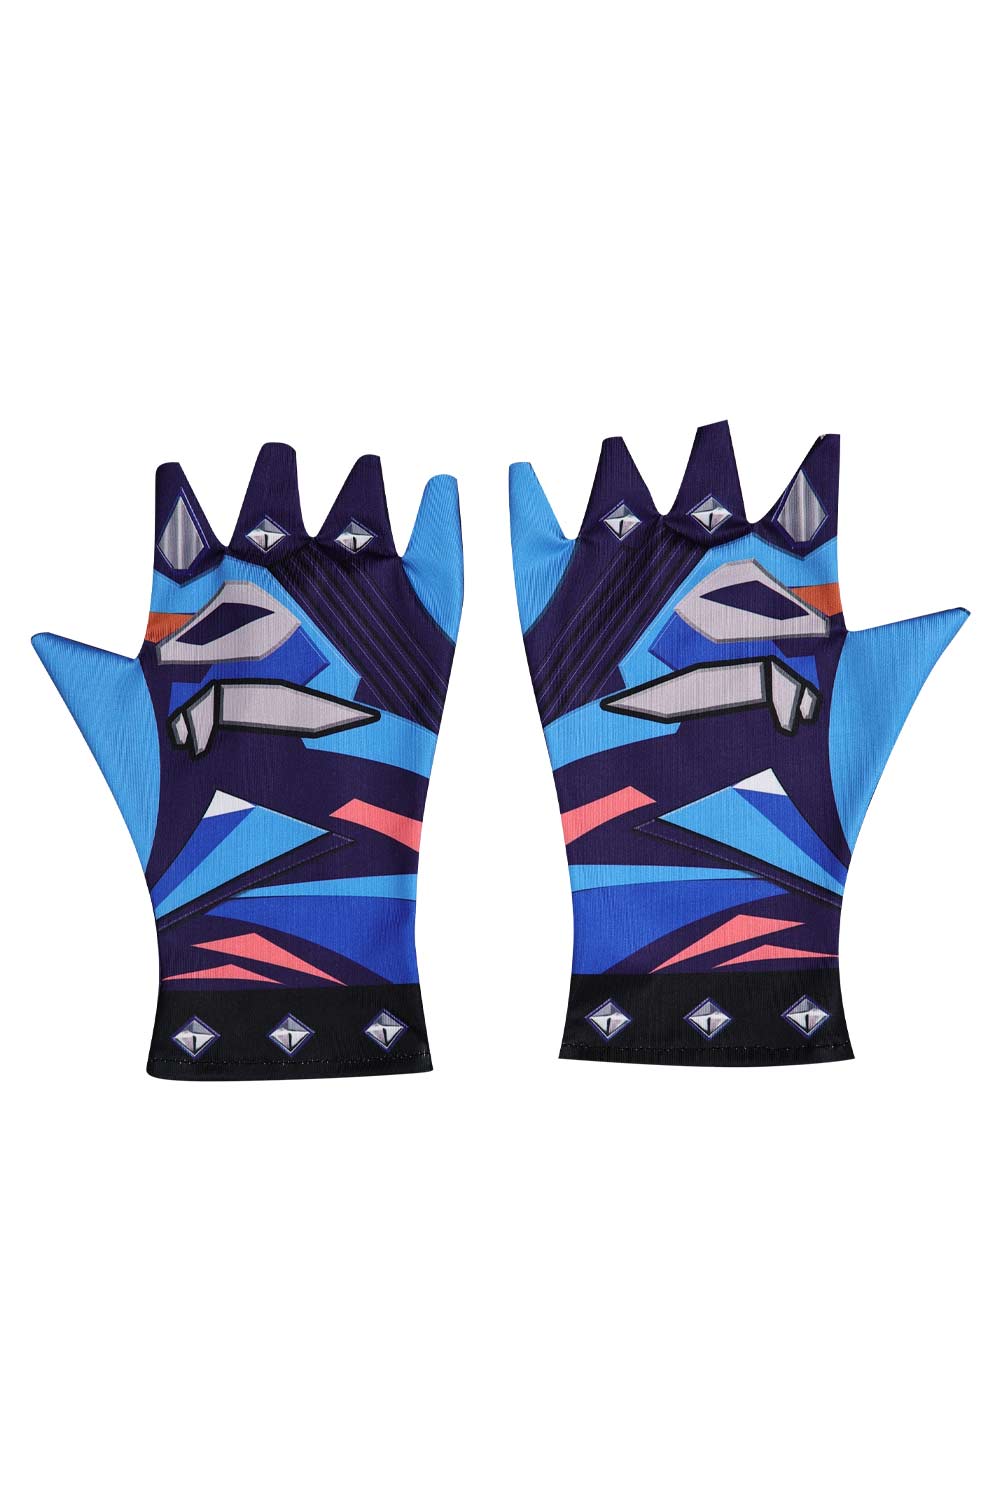 Game VALORANT Yoru Cosplay Printed Gloves Halloween Costume Accessories